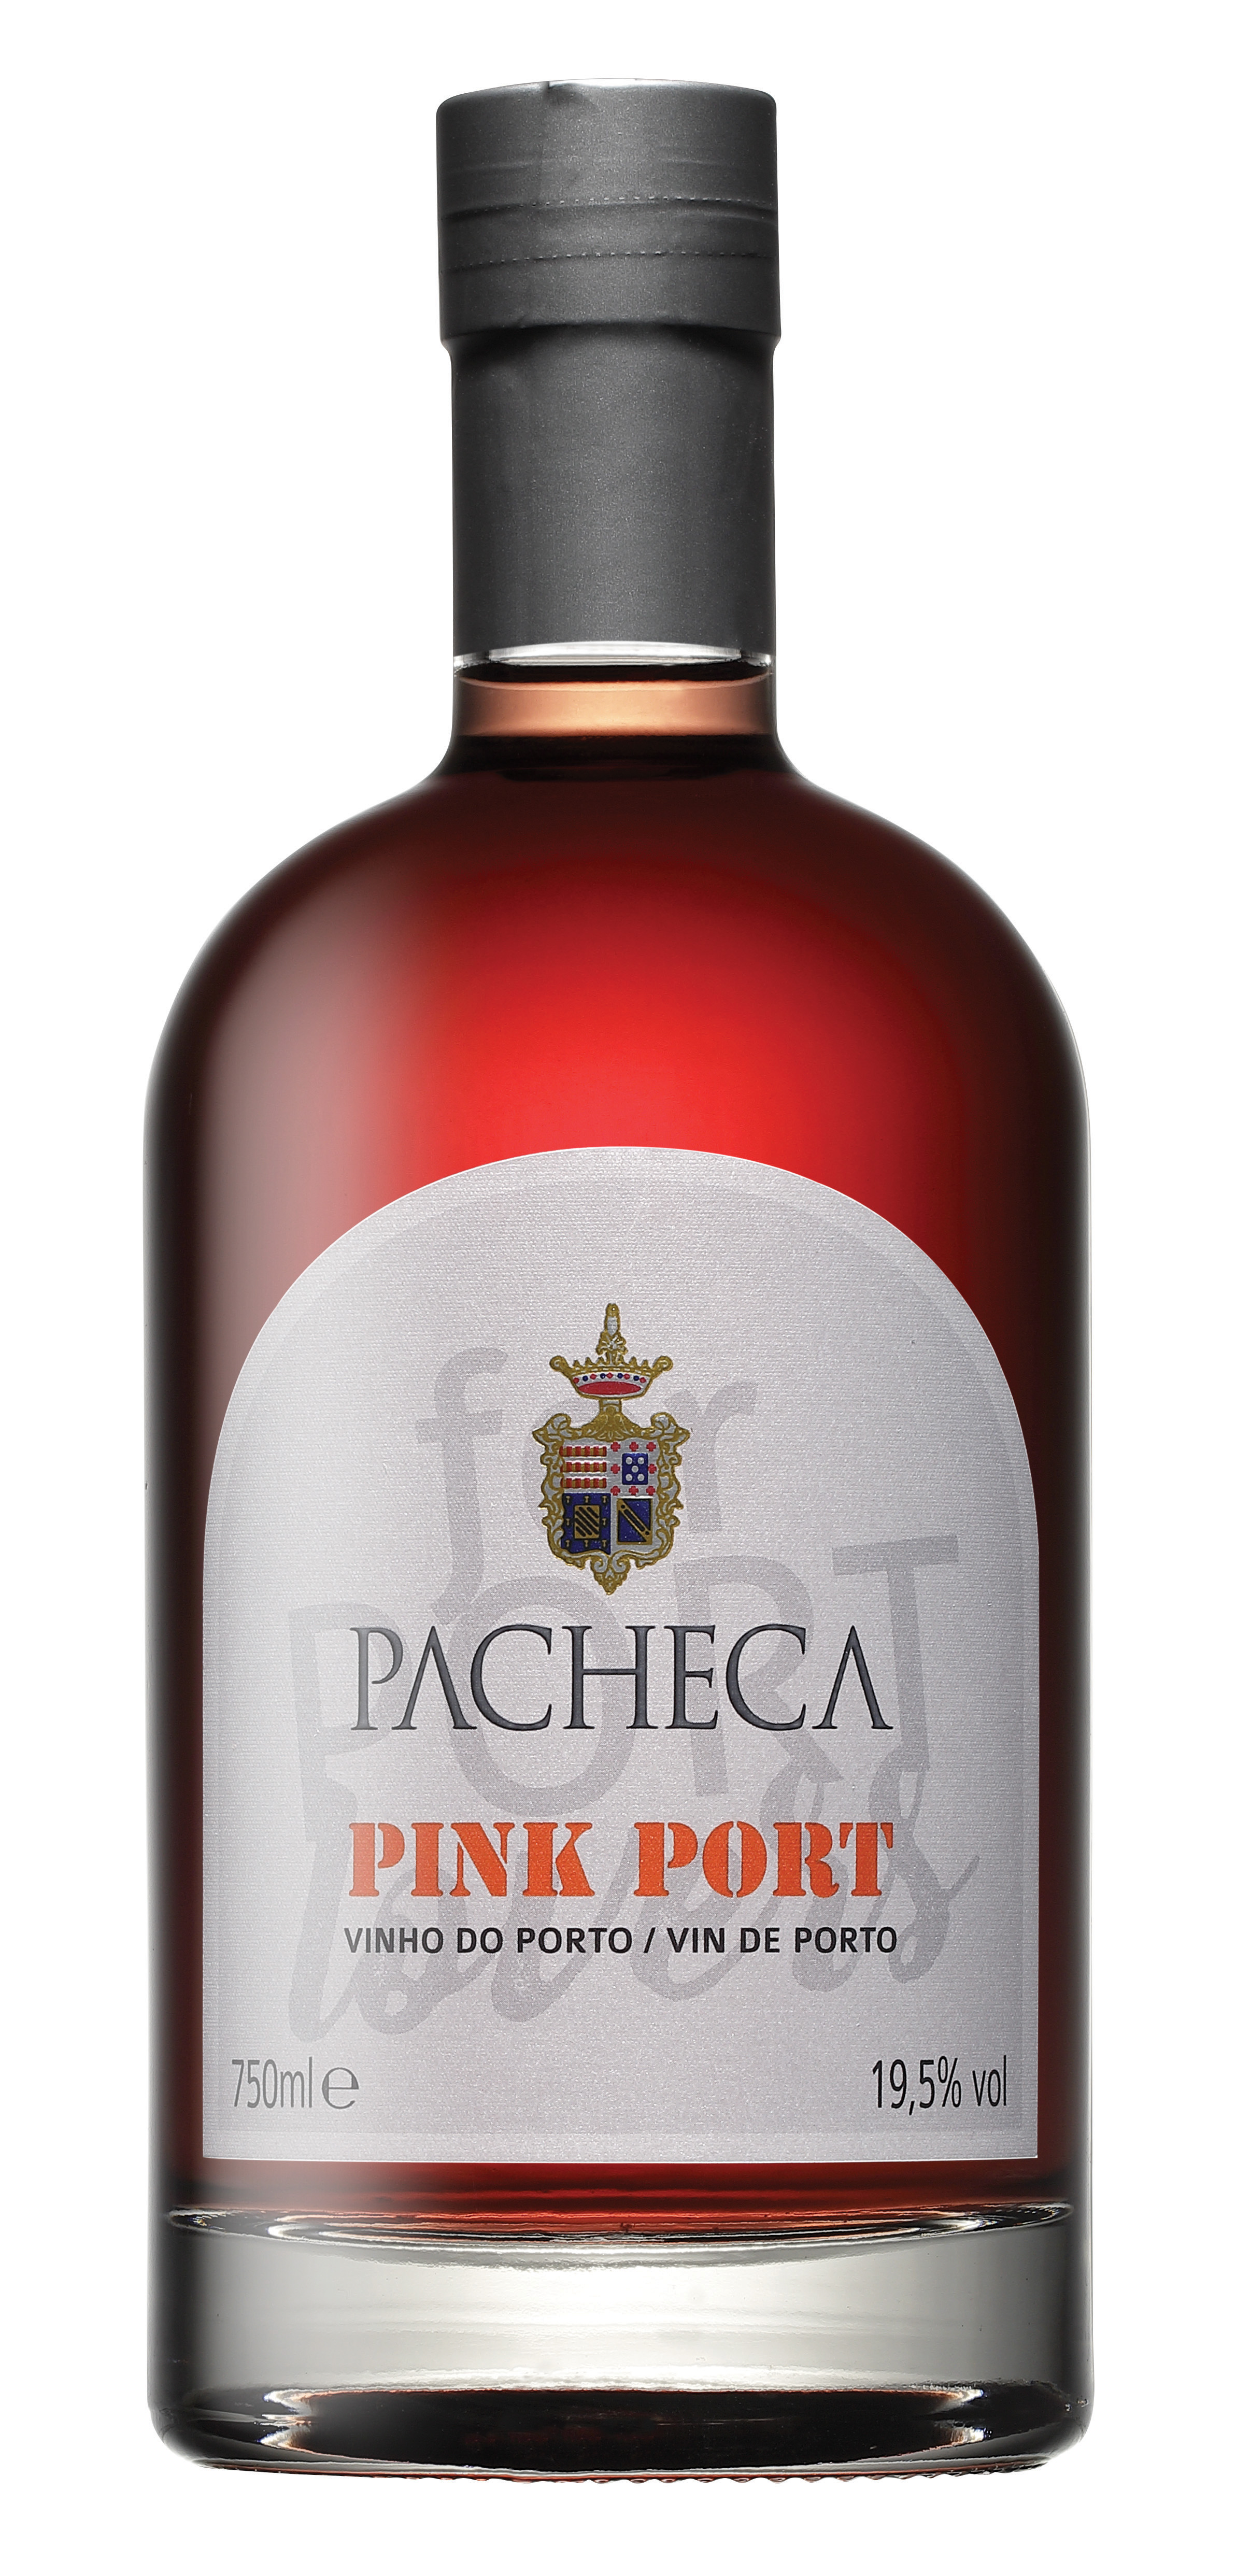 Pacheca Pink Port